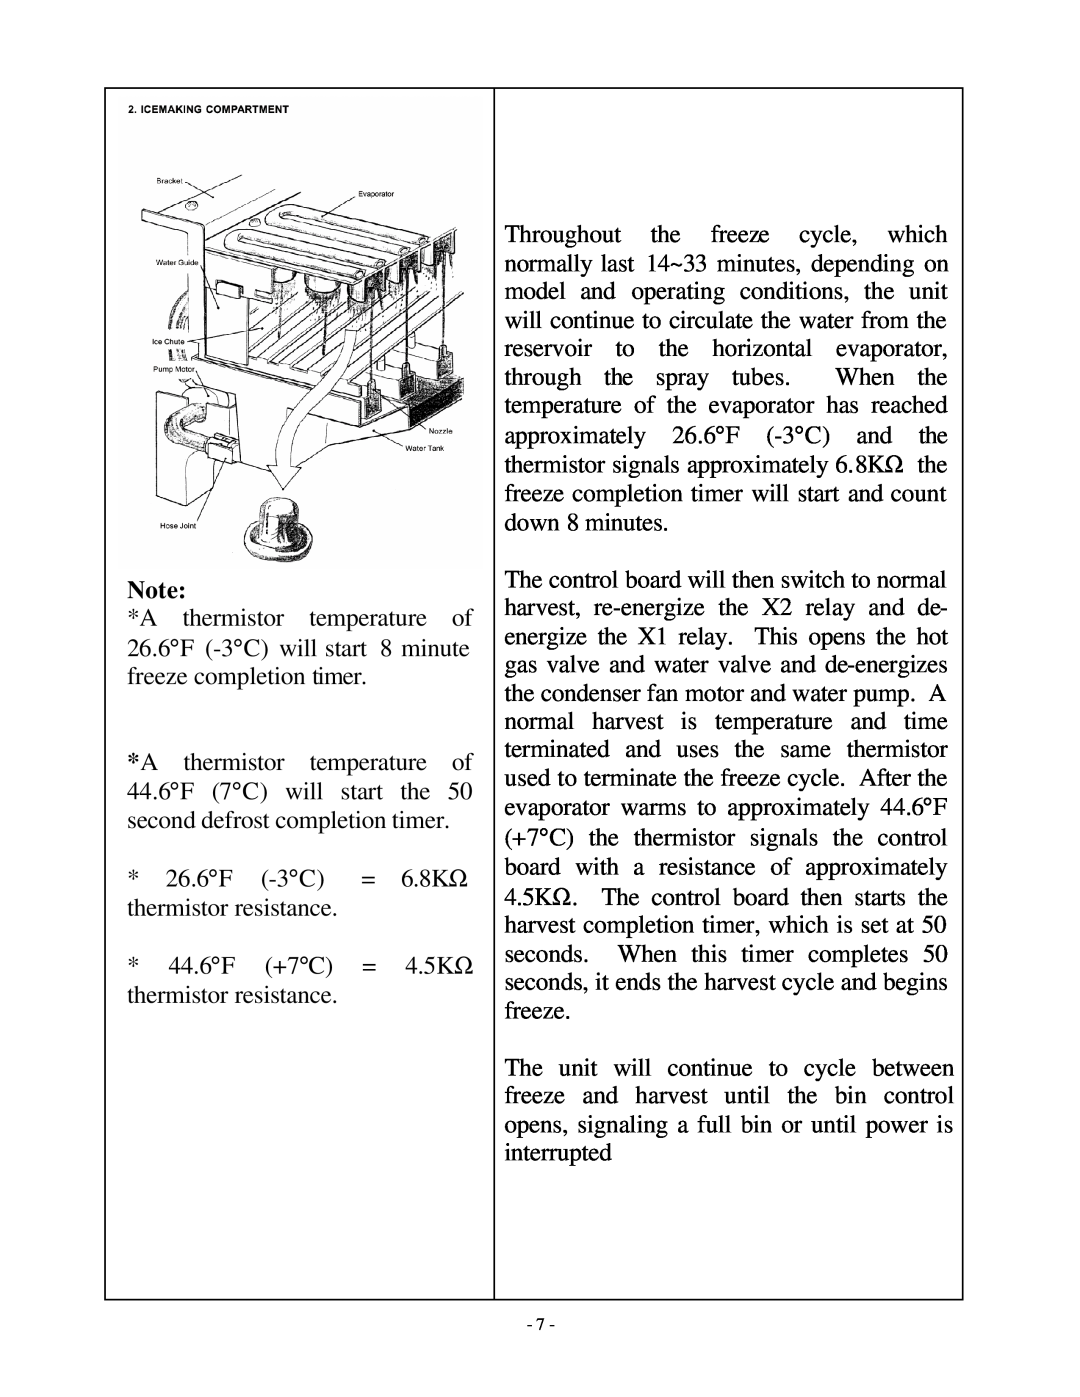 Hoshizaki AM-50BAE manual 26.6F -3C= 6.8KΩ thermistor resistance 